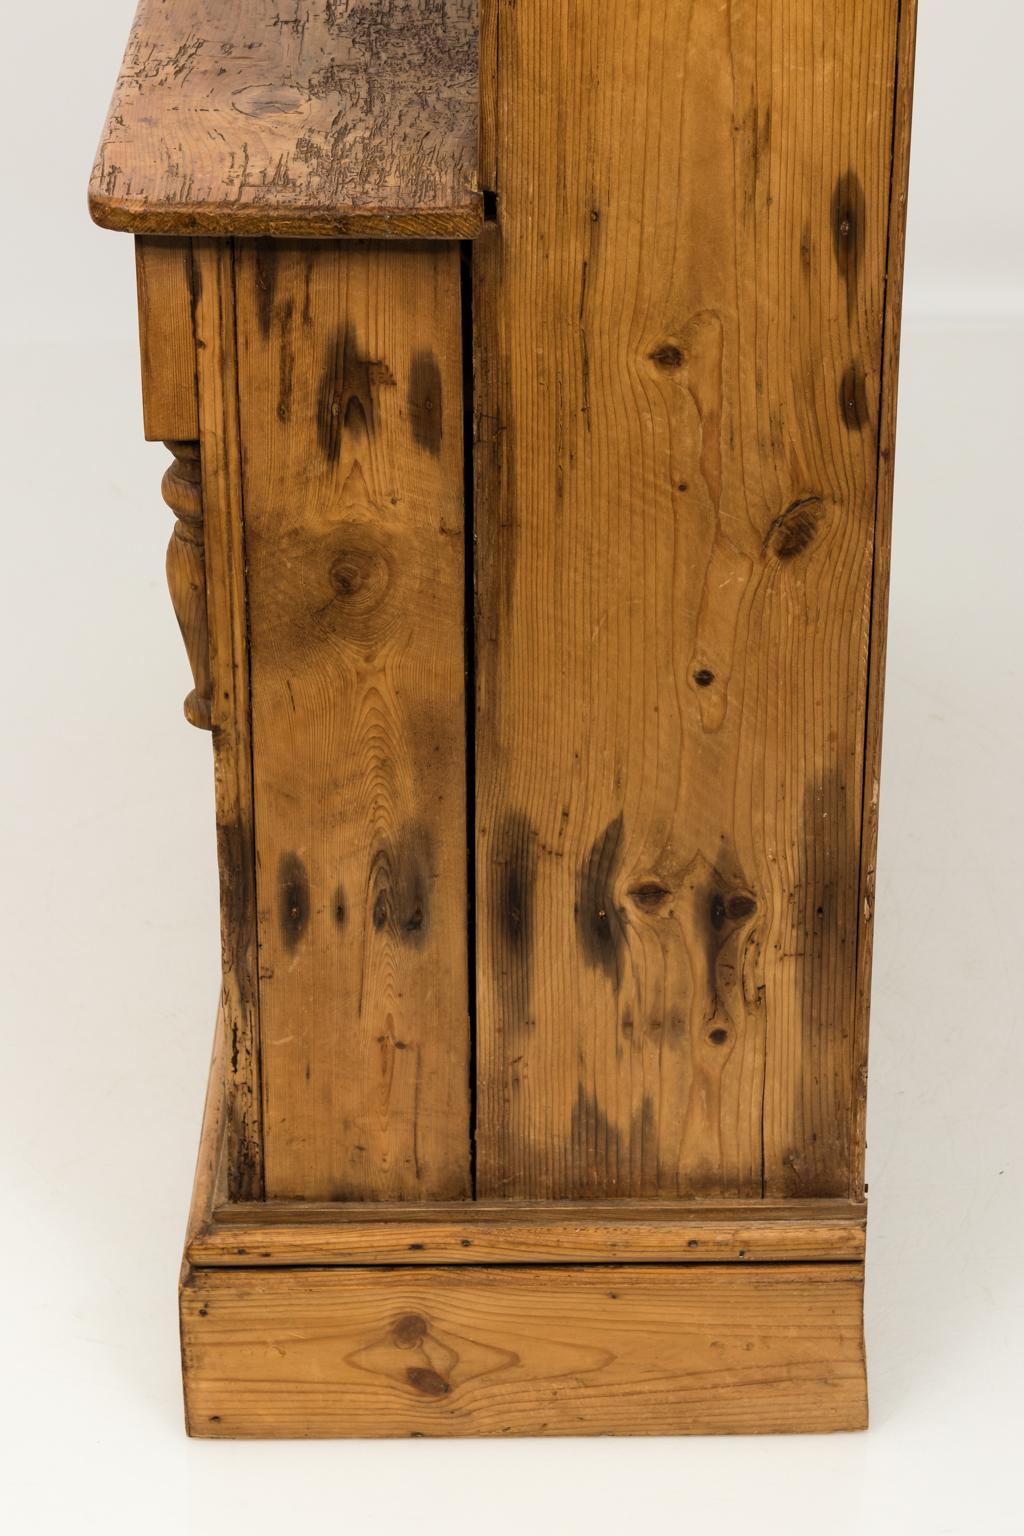 Irish scrub pine cupboard with open plate rack, two drawers, and a bottom cupboard, circa late 19th century.
     